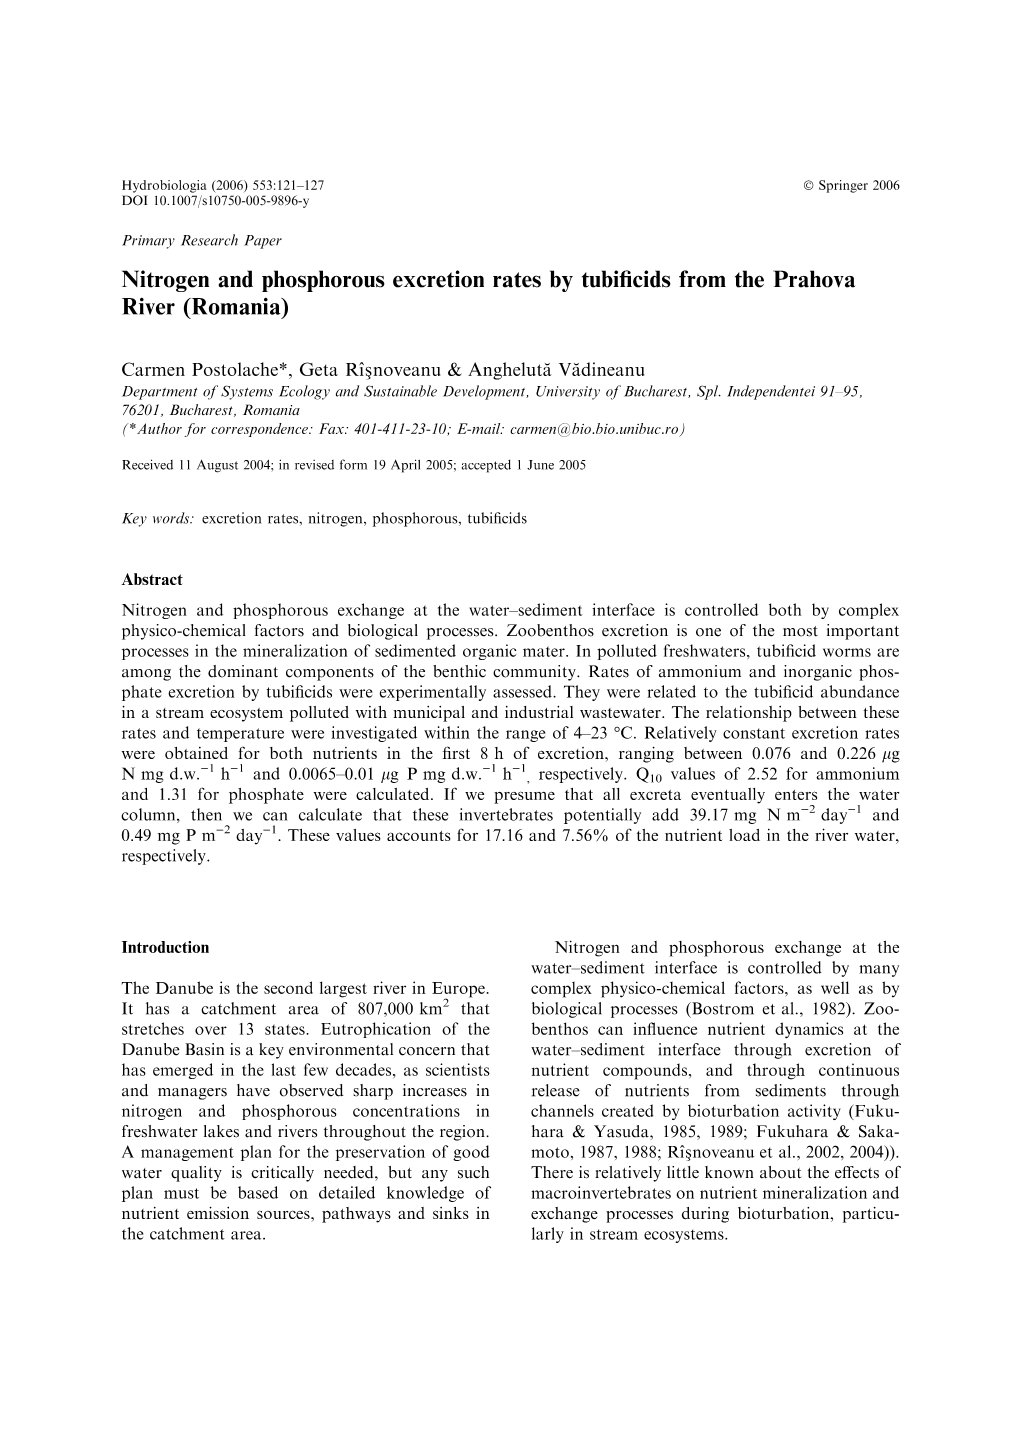 Nitrogen and Phosphorous Excretion Rates by Tubificids from the Prahova